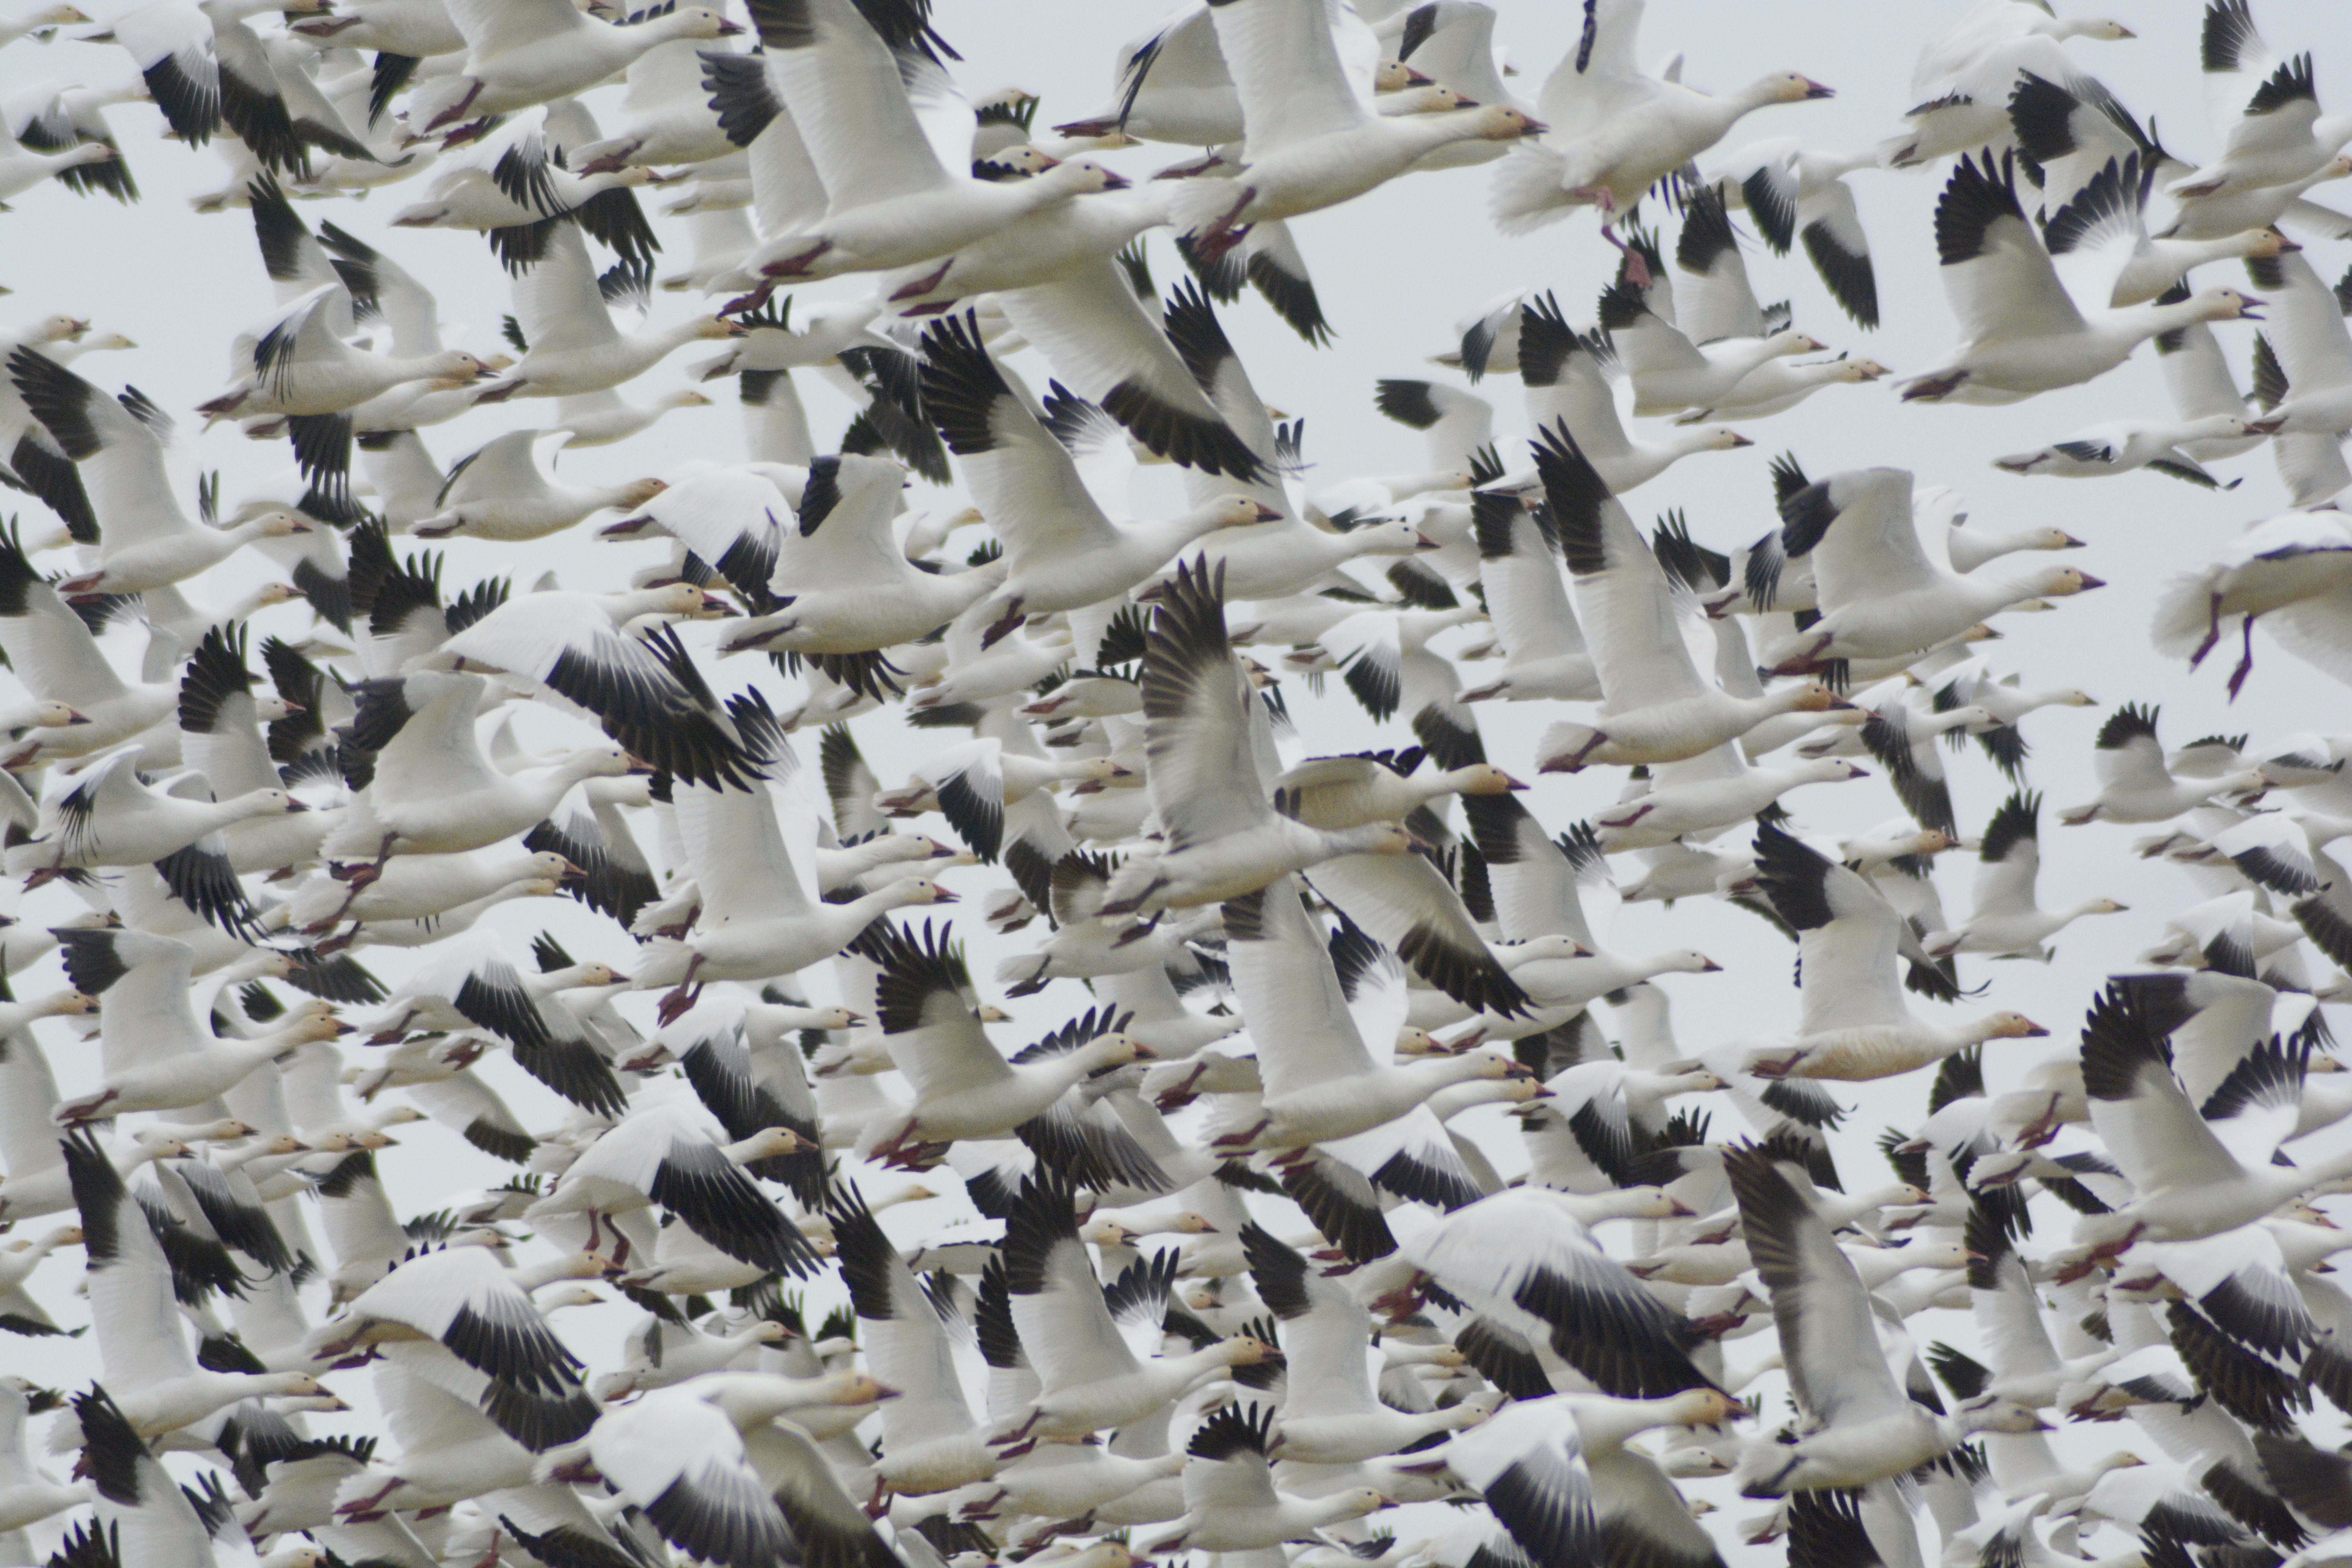 Snow geese flock, Southwest region, waterfowl, snow goose